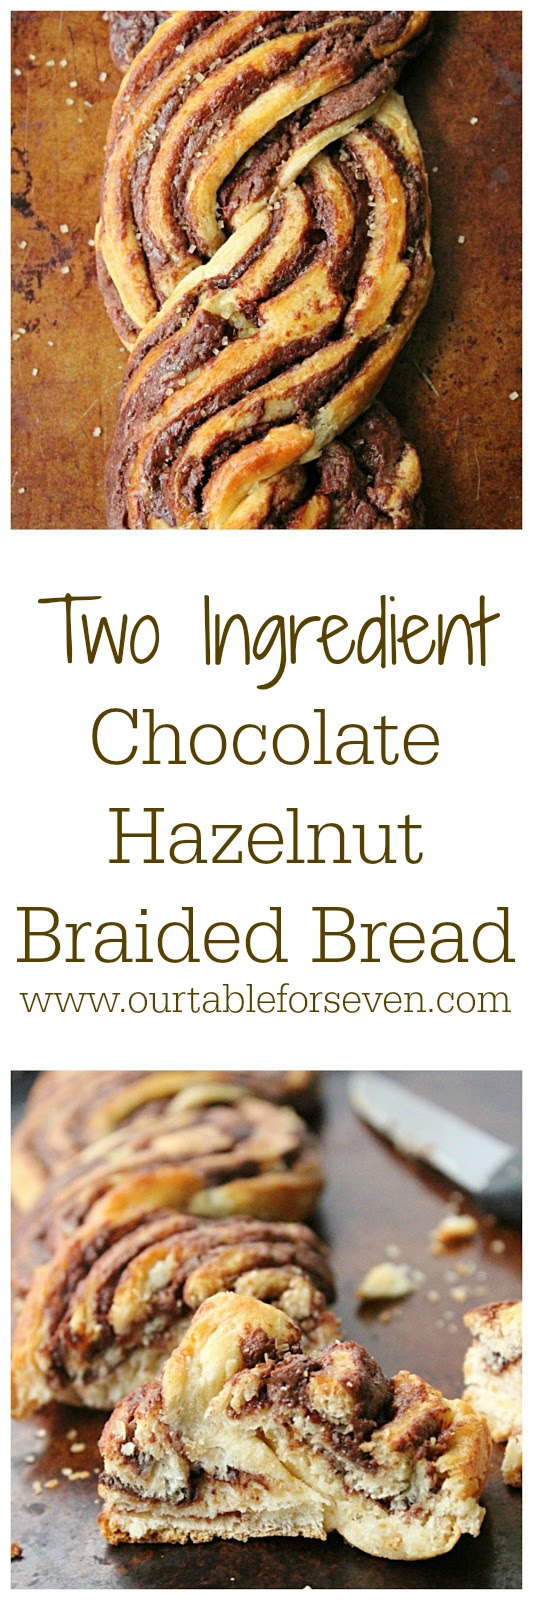 Two Ingredient Chocolate Hazelnut Braided Bread pin image